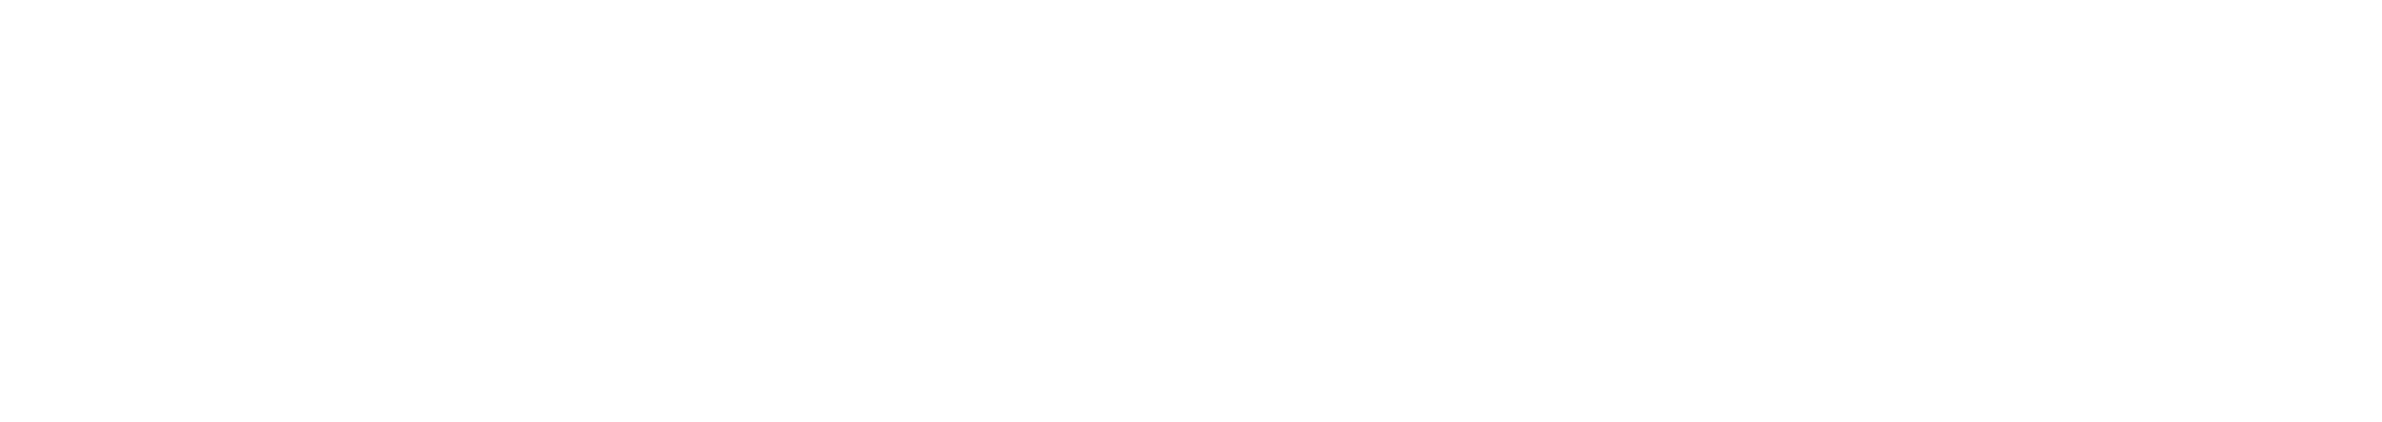 Talent Insight Group logo